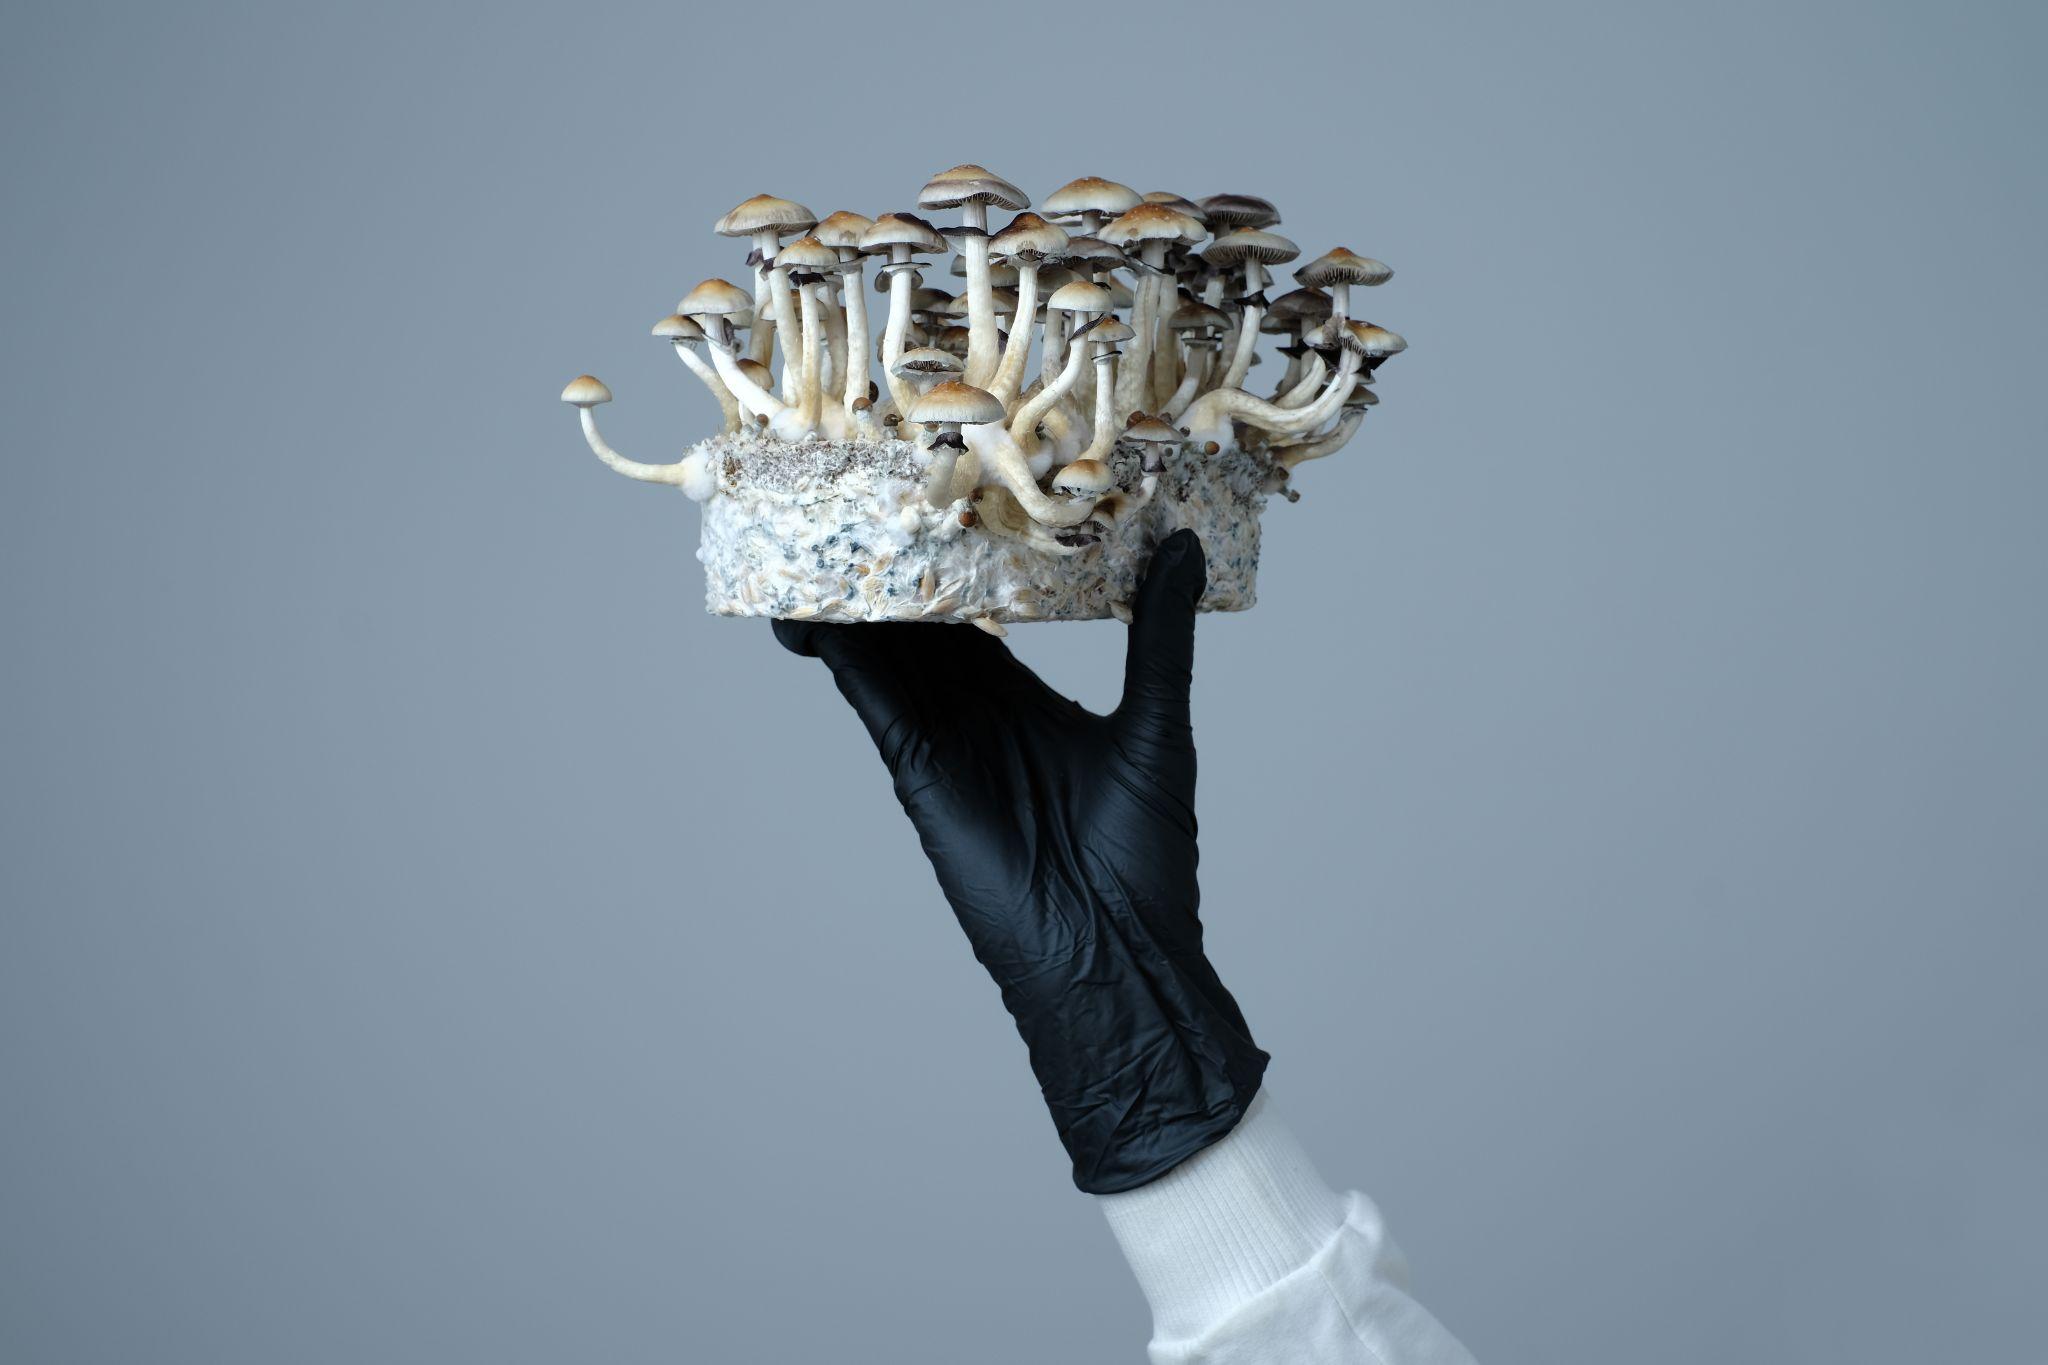 Mycelium Block Of Psilocybe Cubensis Magic Mushrooms In A Hand On Grey Background